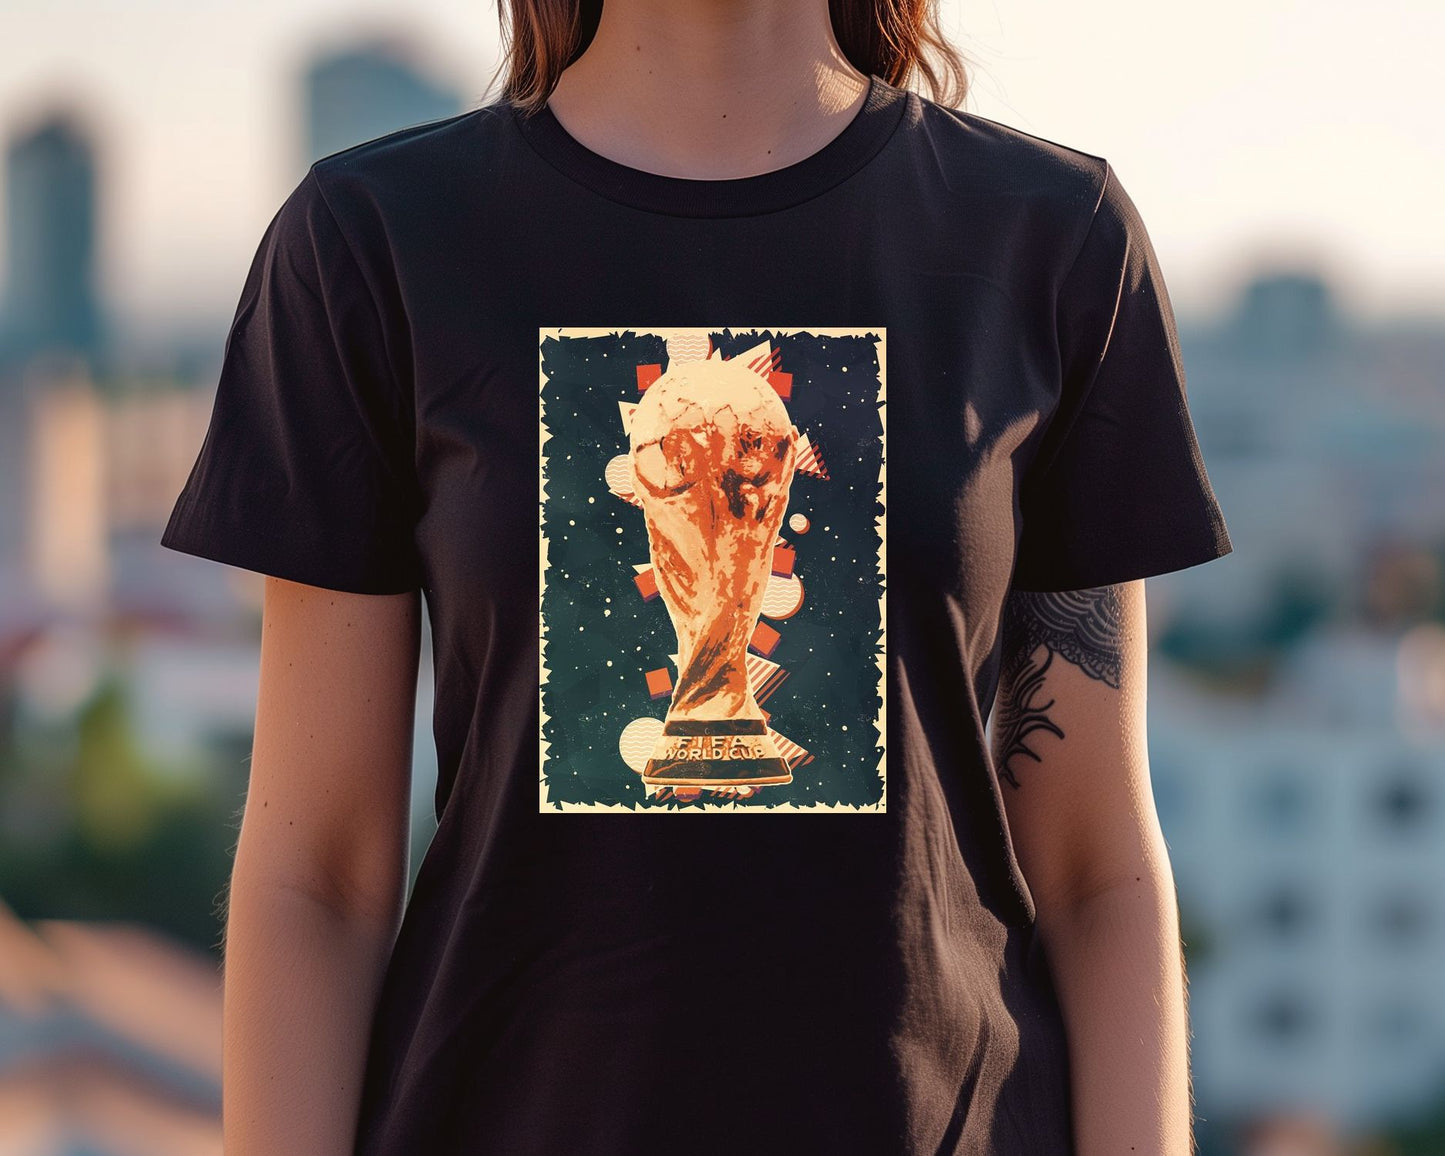 World Cup Trophy - @ColorizeStudio